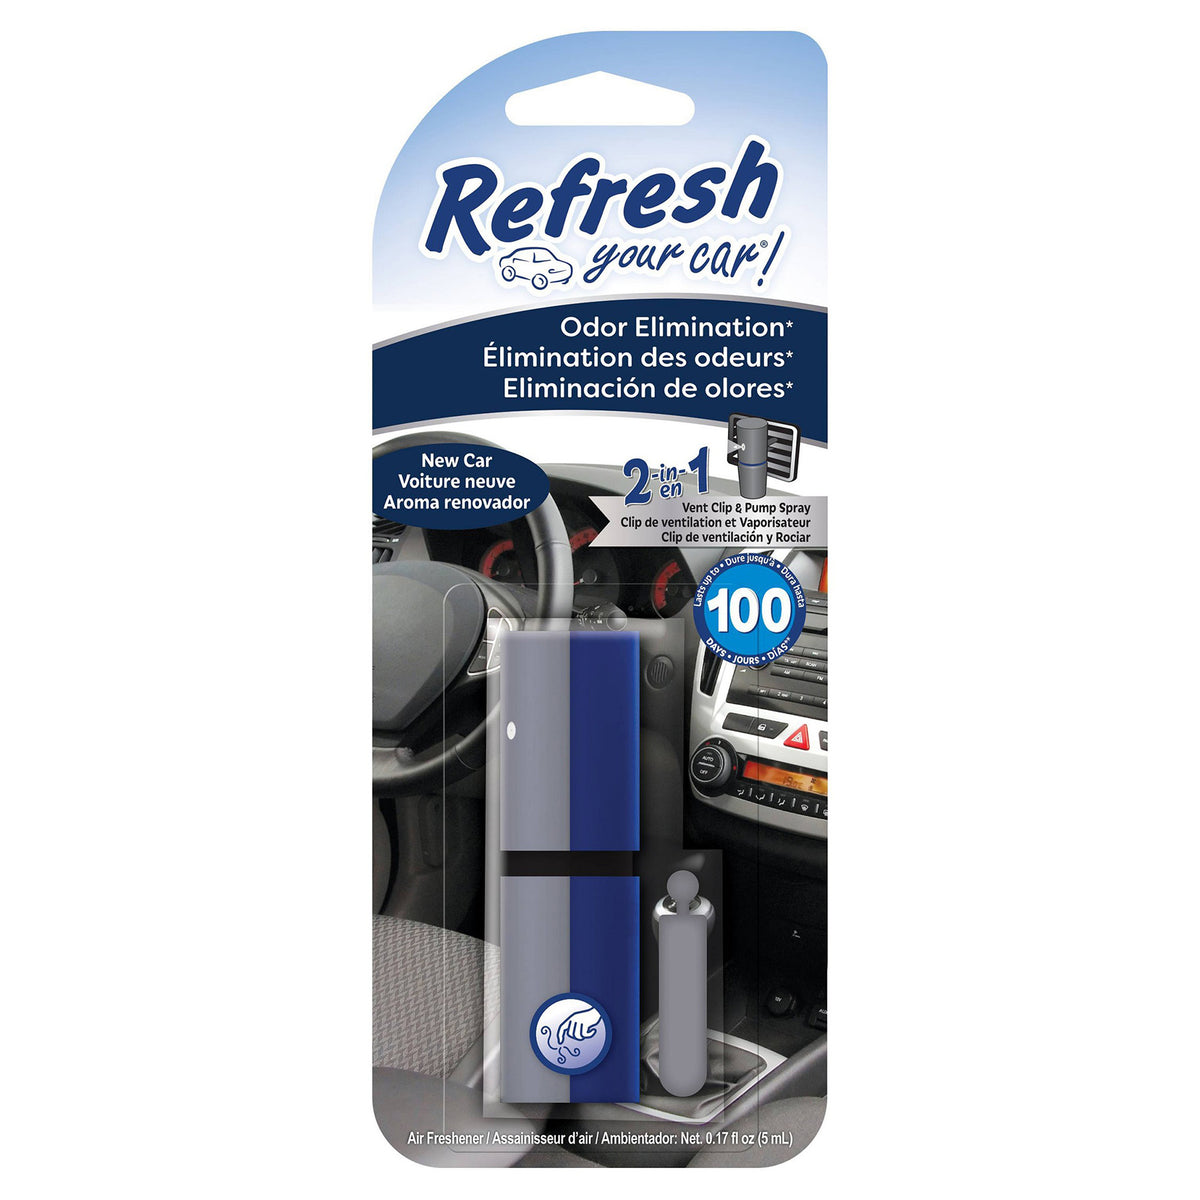 Odor Elimination air freshener Size: 5 ml